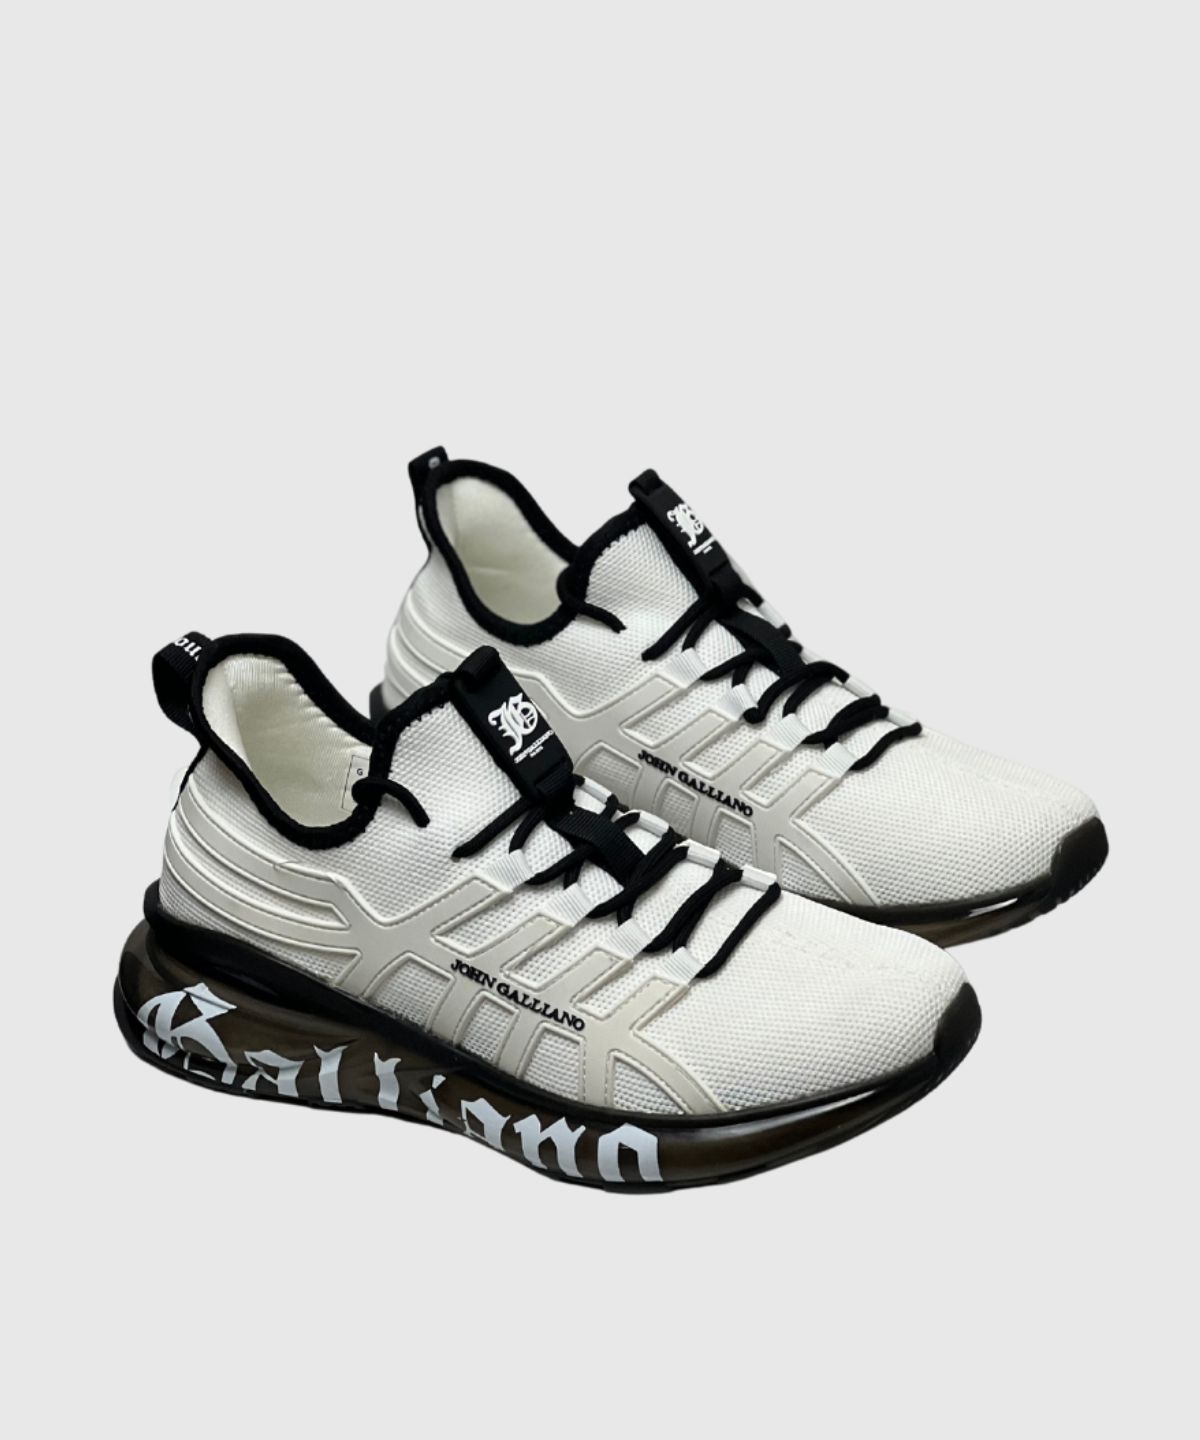 Men’s John Galliano Sneakers